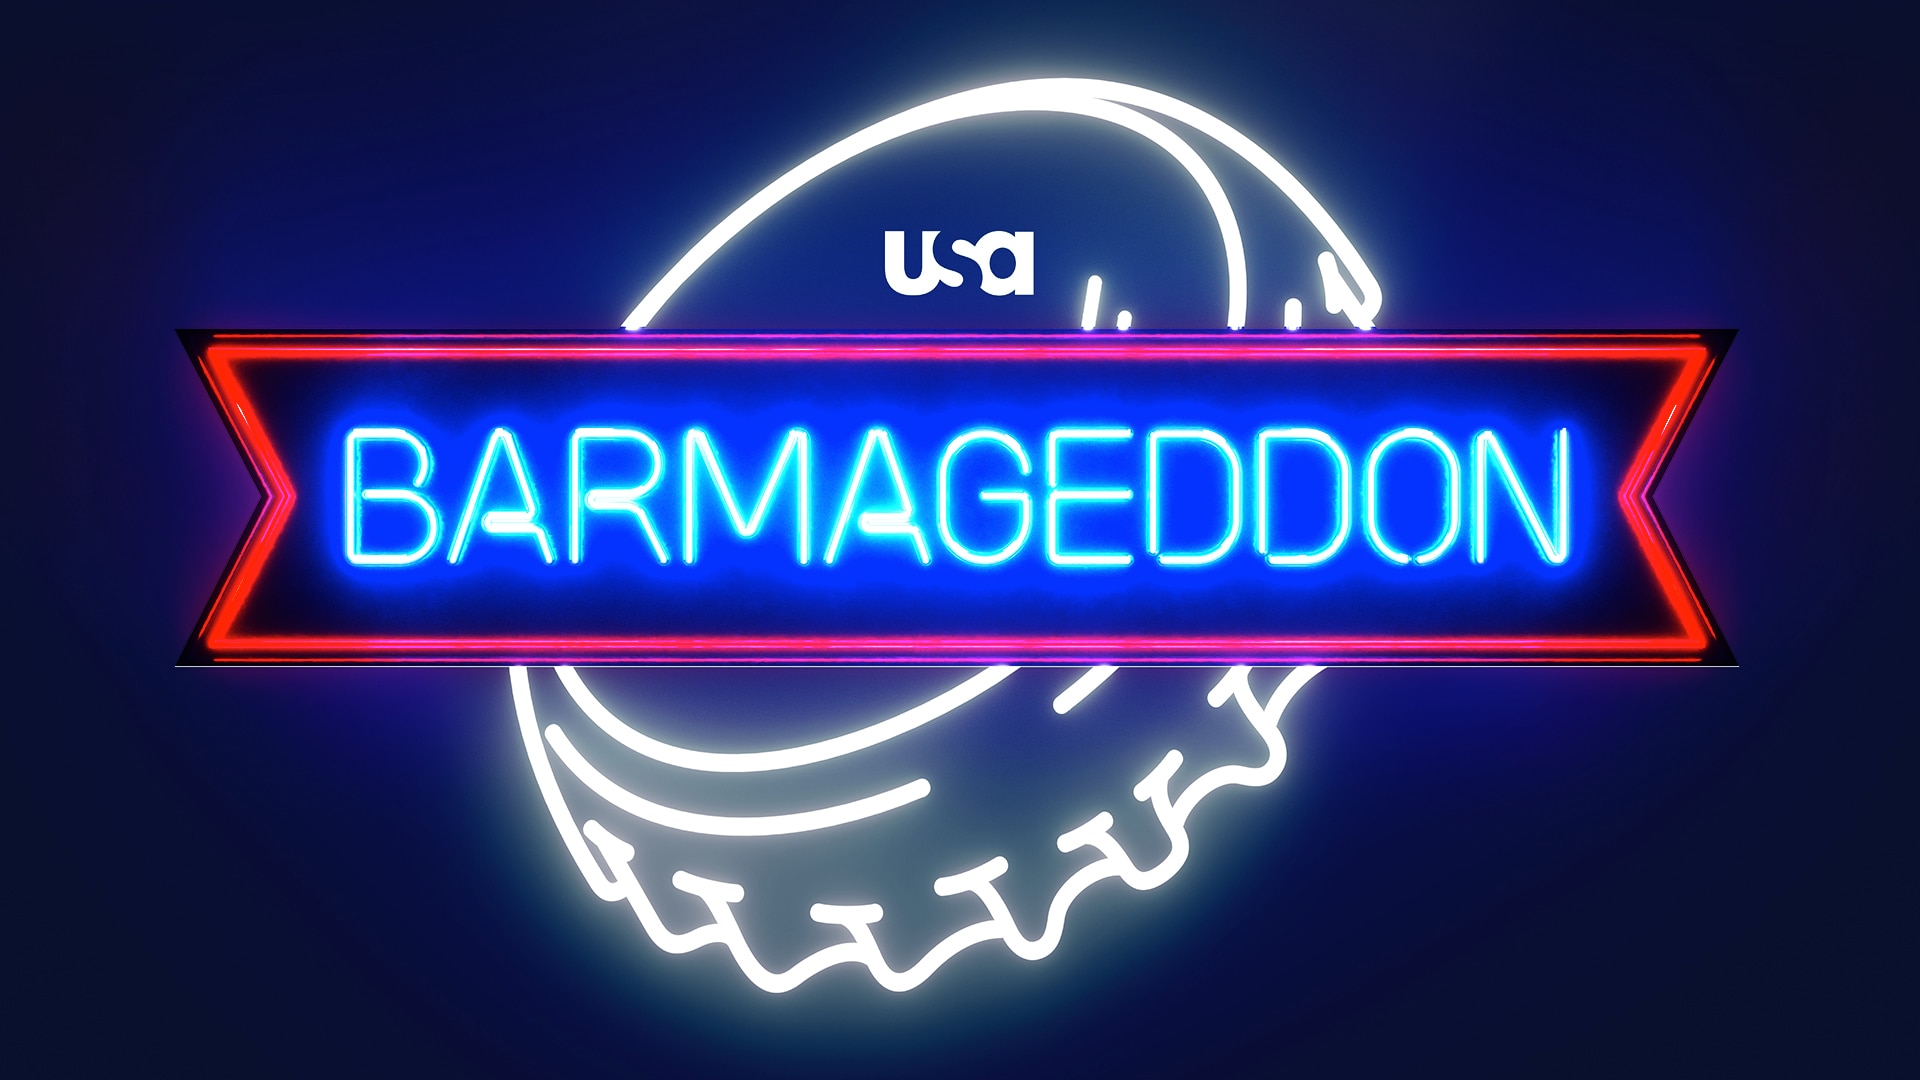 Nikki Bella back on TV tonight hosting Barmageddon on USA Network –